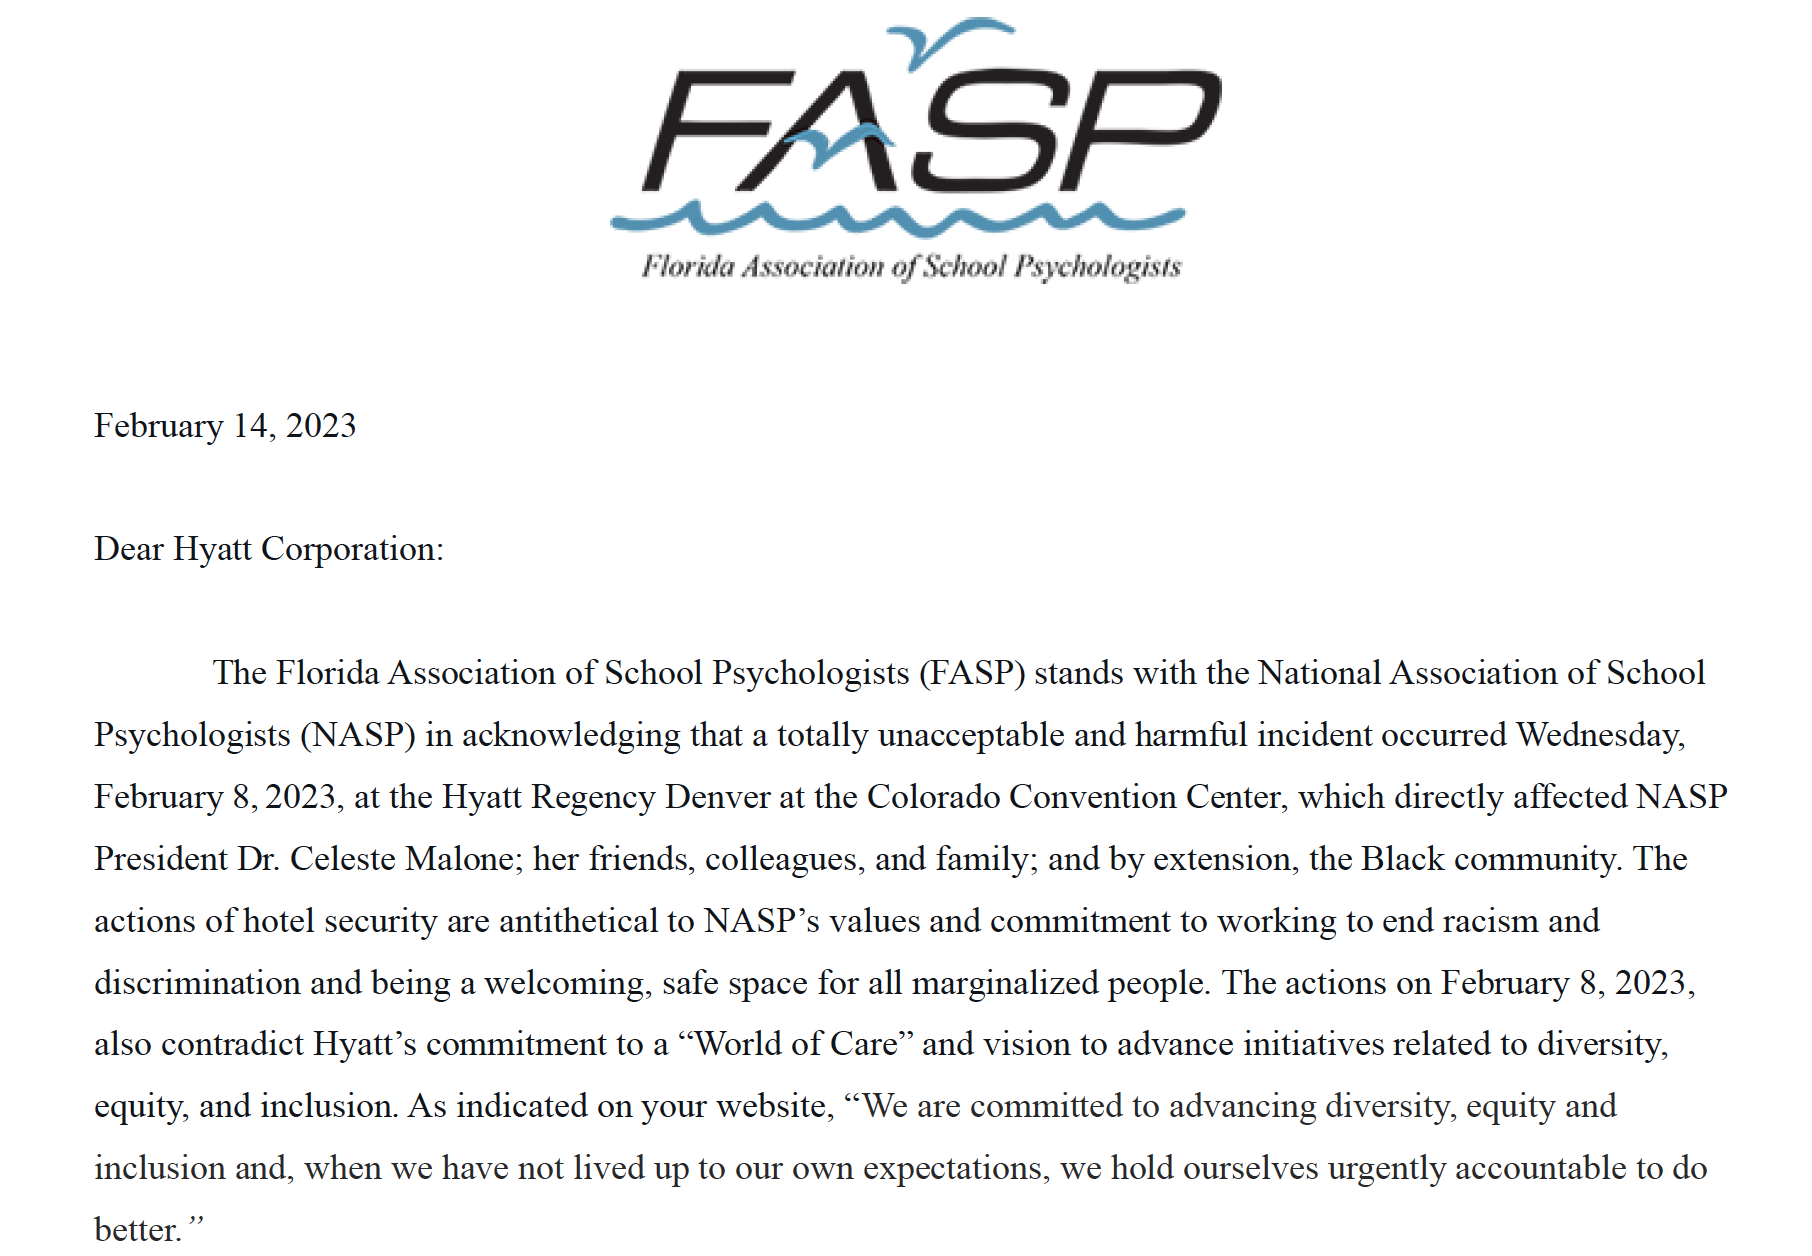 FASP Response to Hyatt Regency Denver